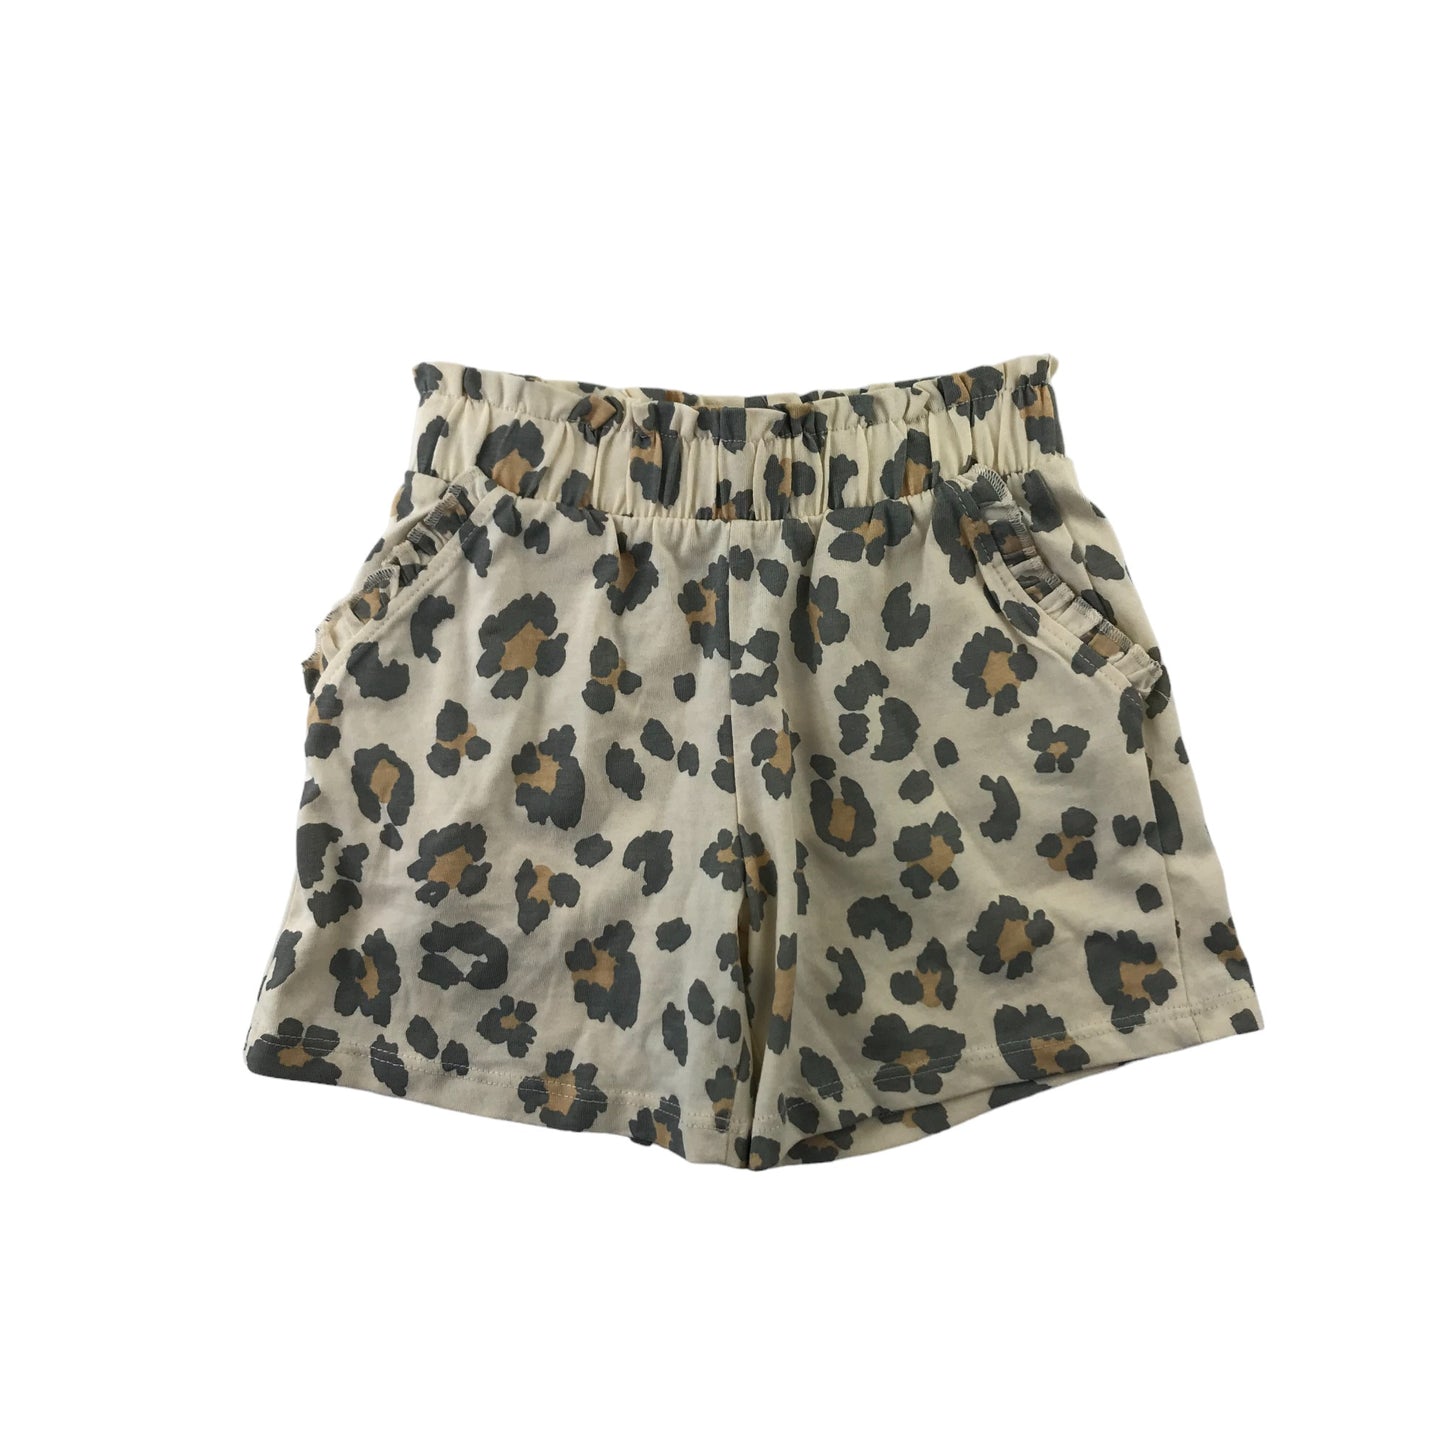 Tu shorts set 5 years beige and leopard print pattern light summery cotton